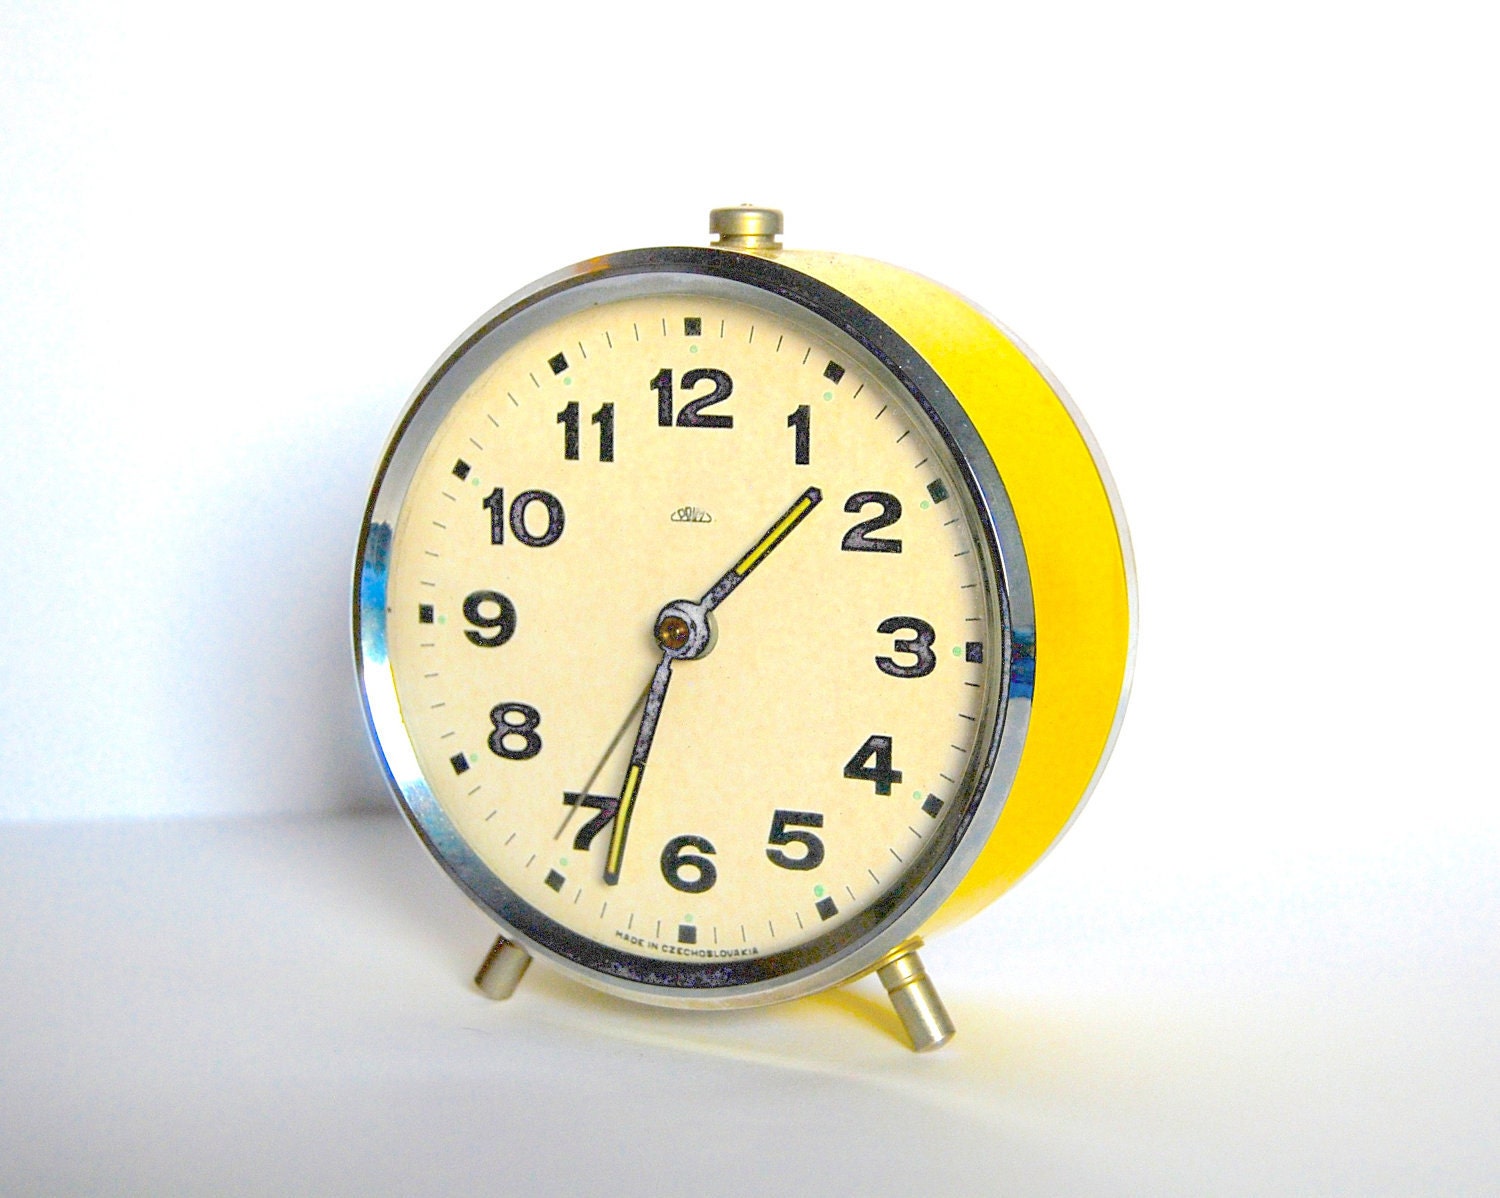 yellow alarm clock